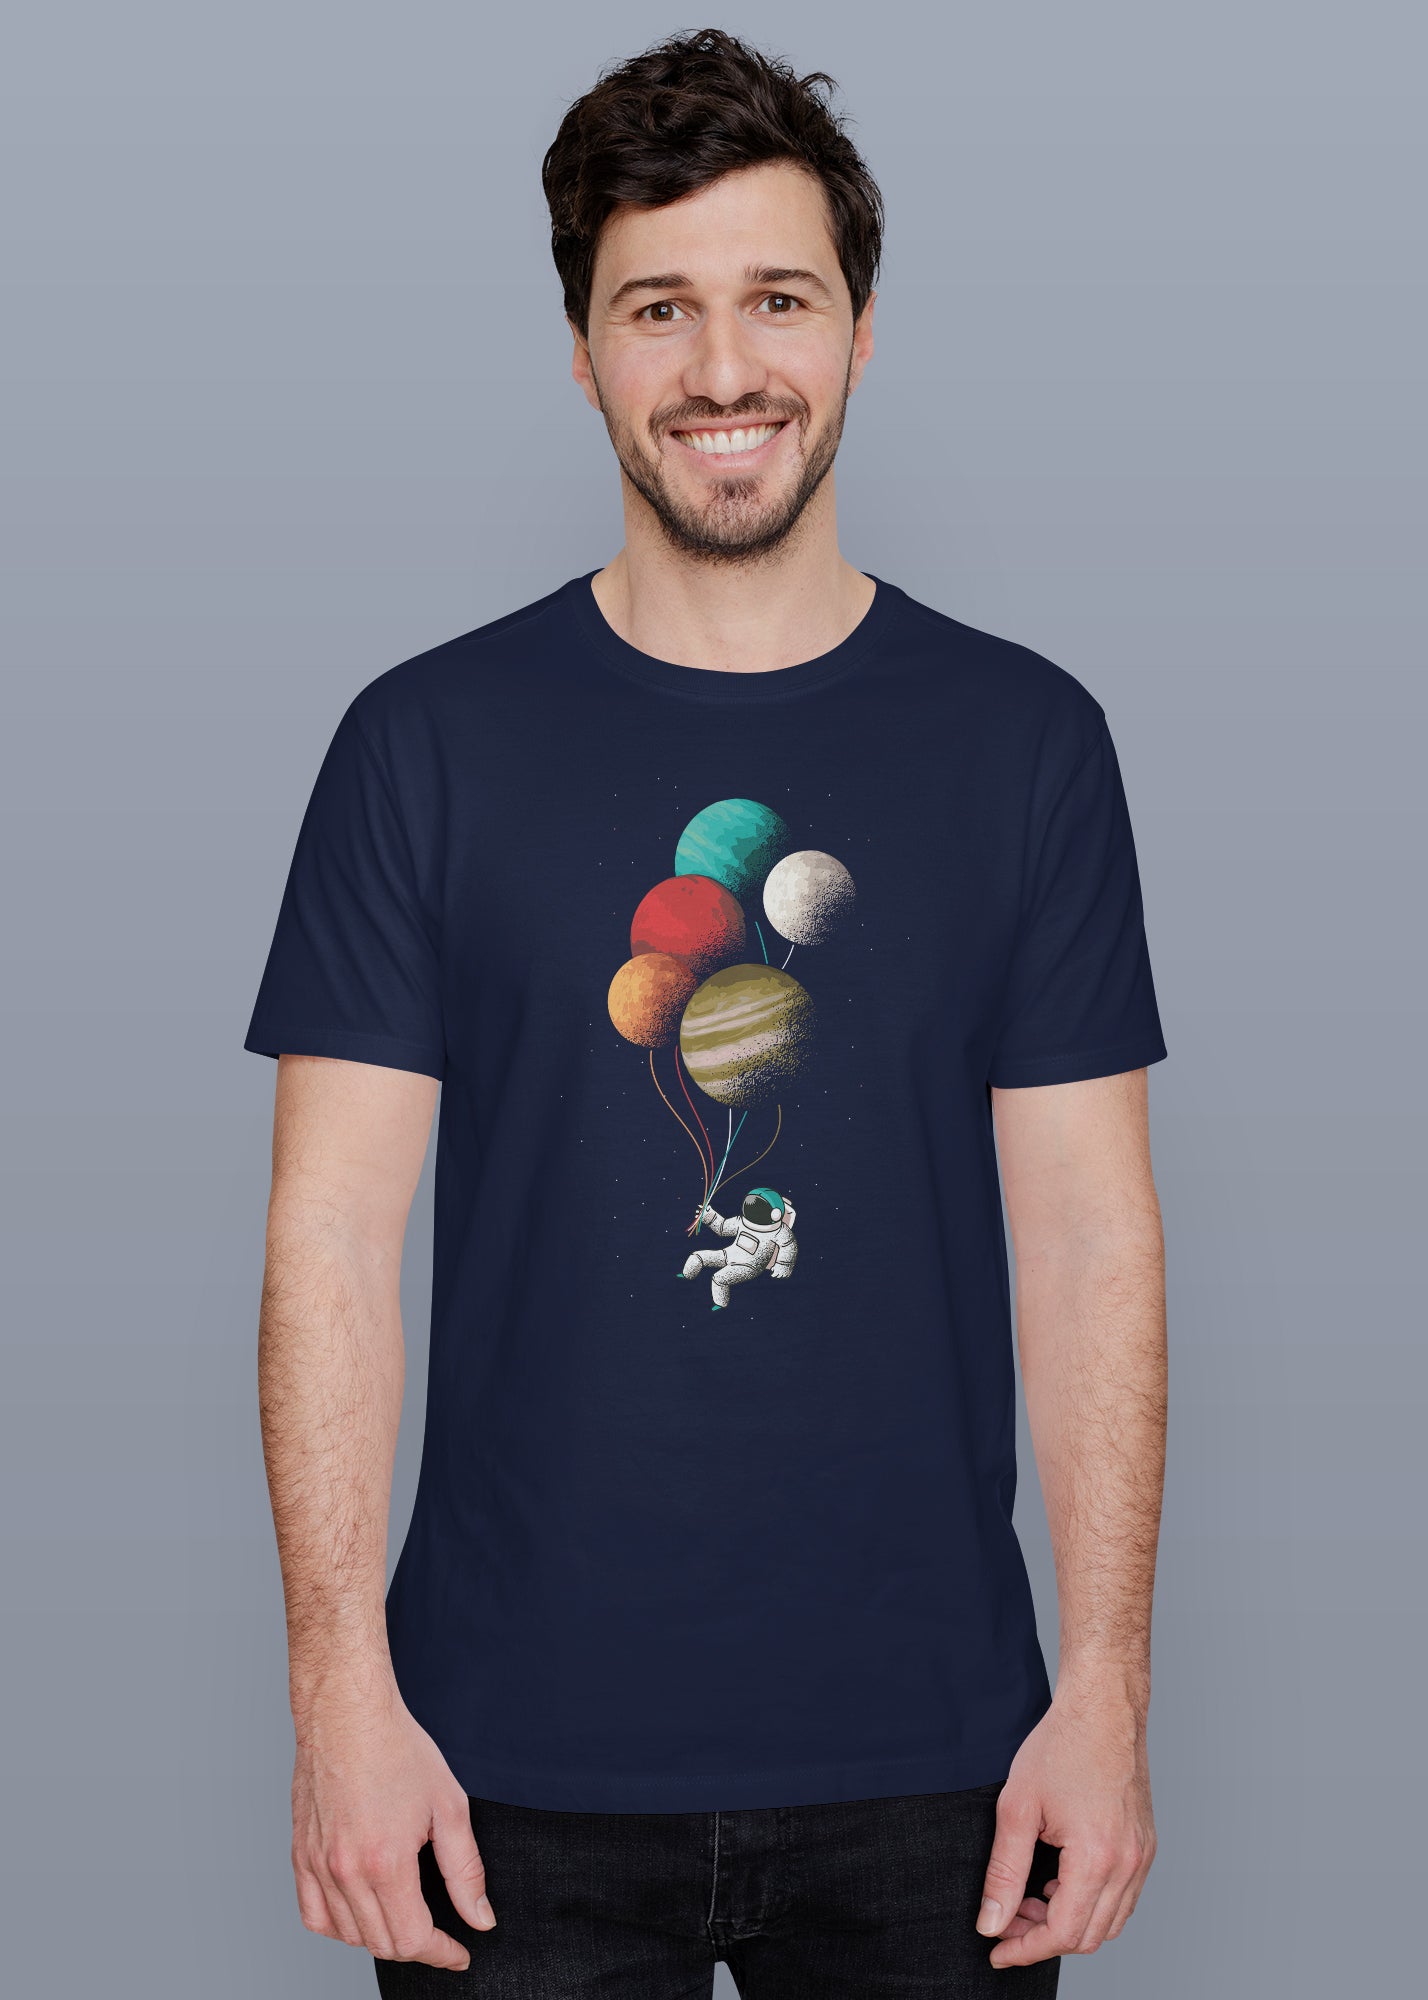 Al Astronaut Balloon Printed Half Sleeve Premium Cotton T-shirt For Men